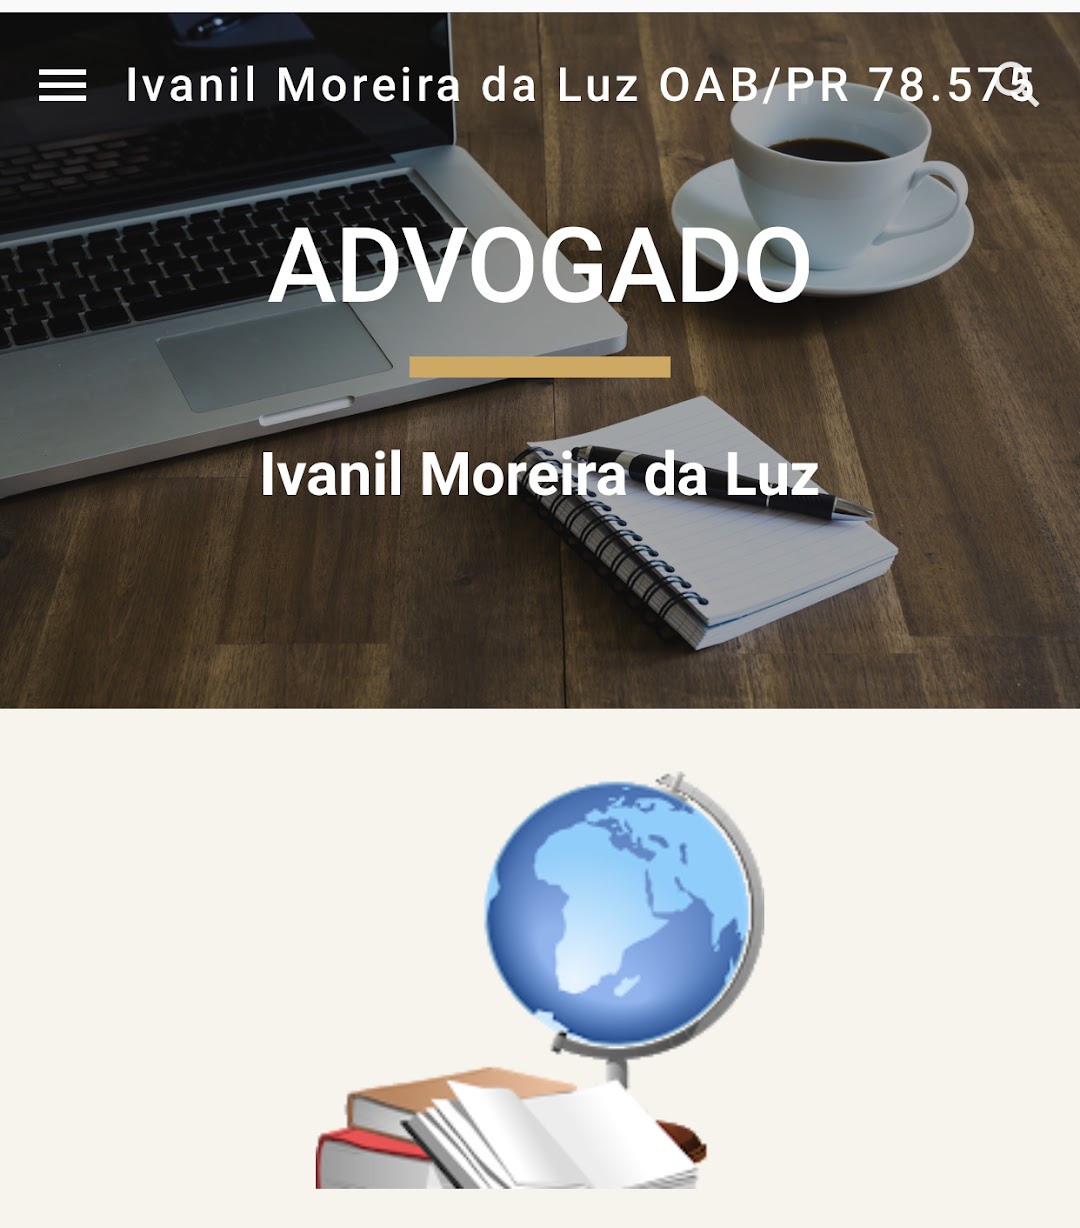 Advogado IVANIL Moreira da Luz